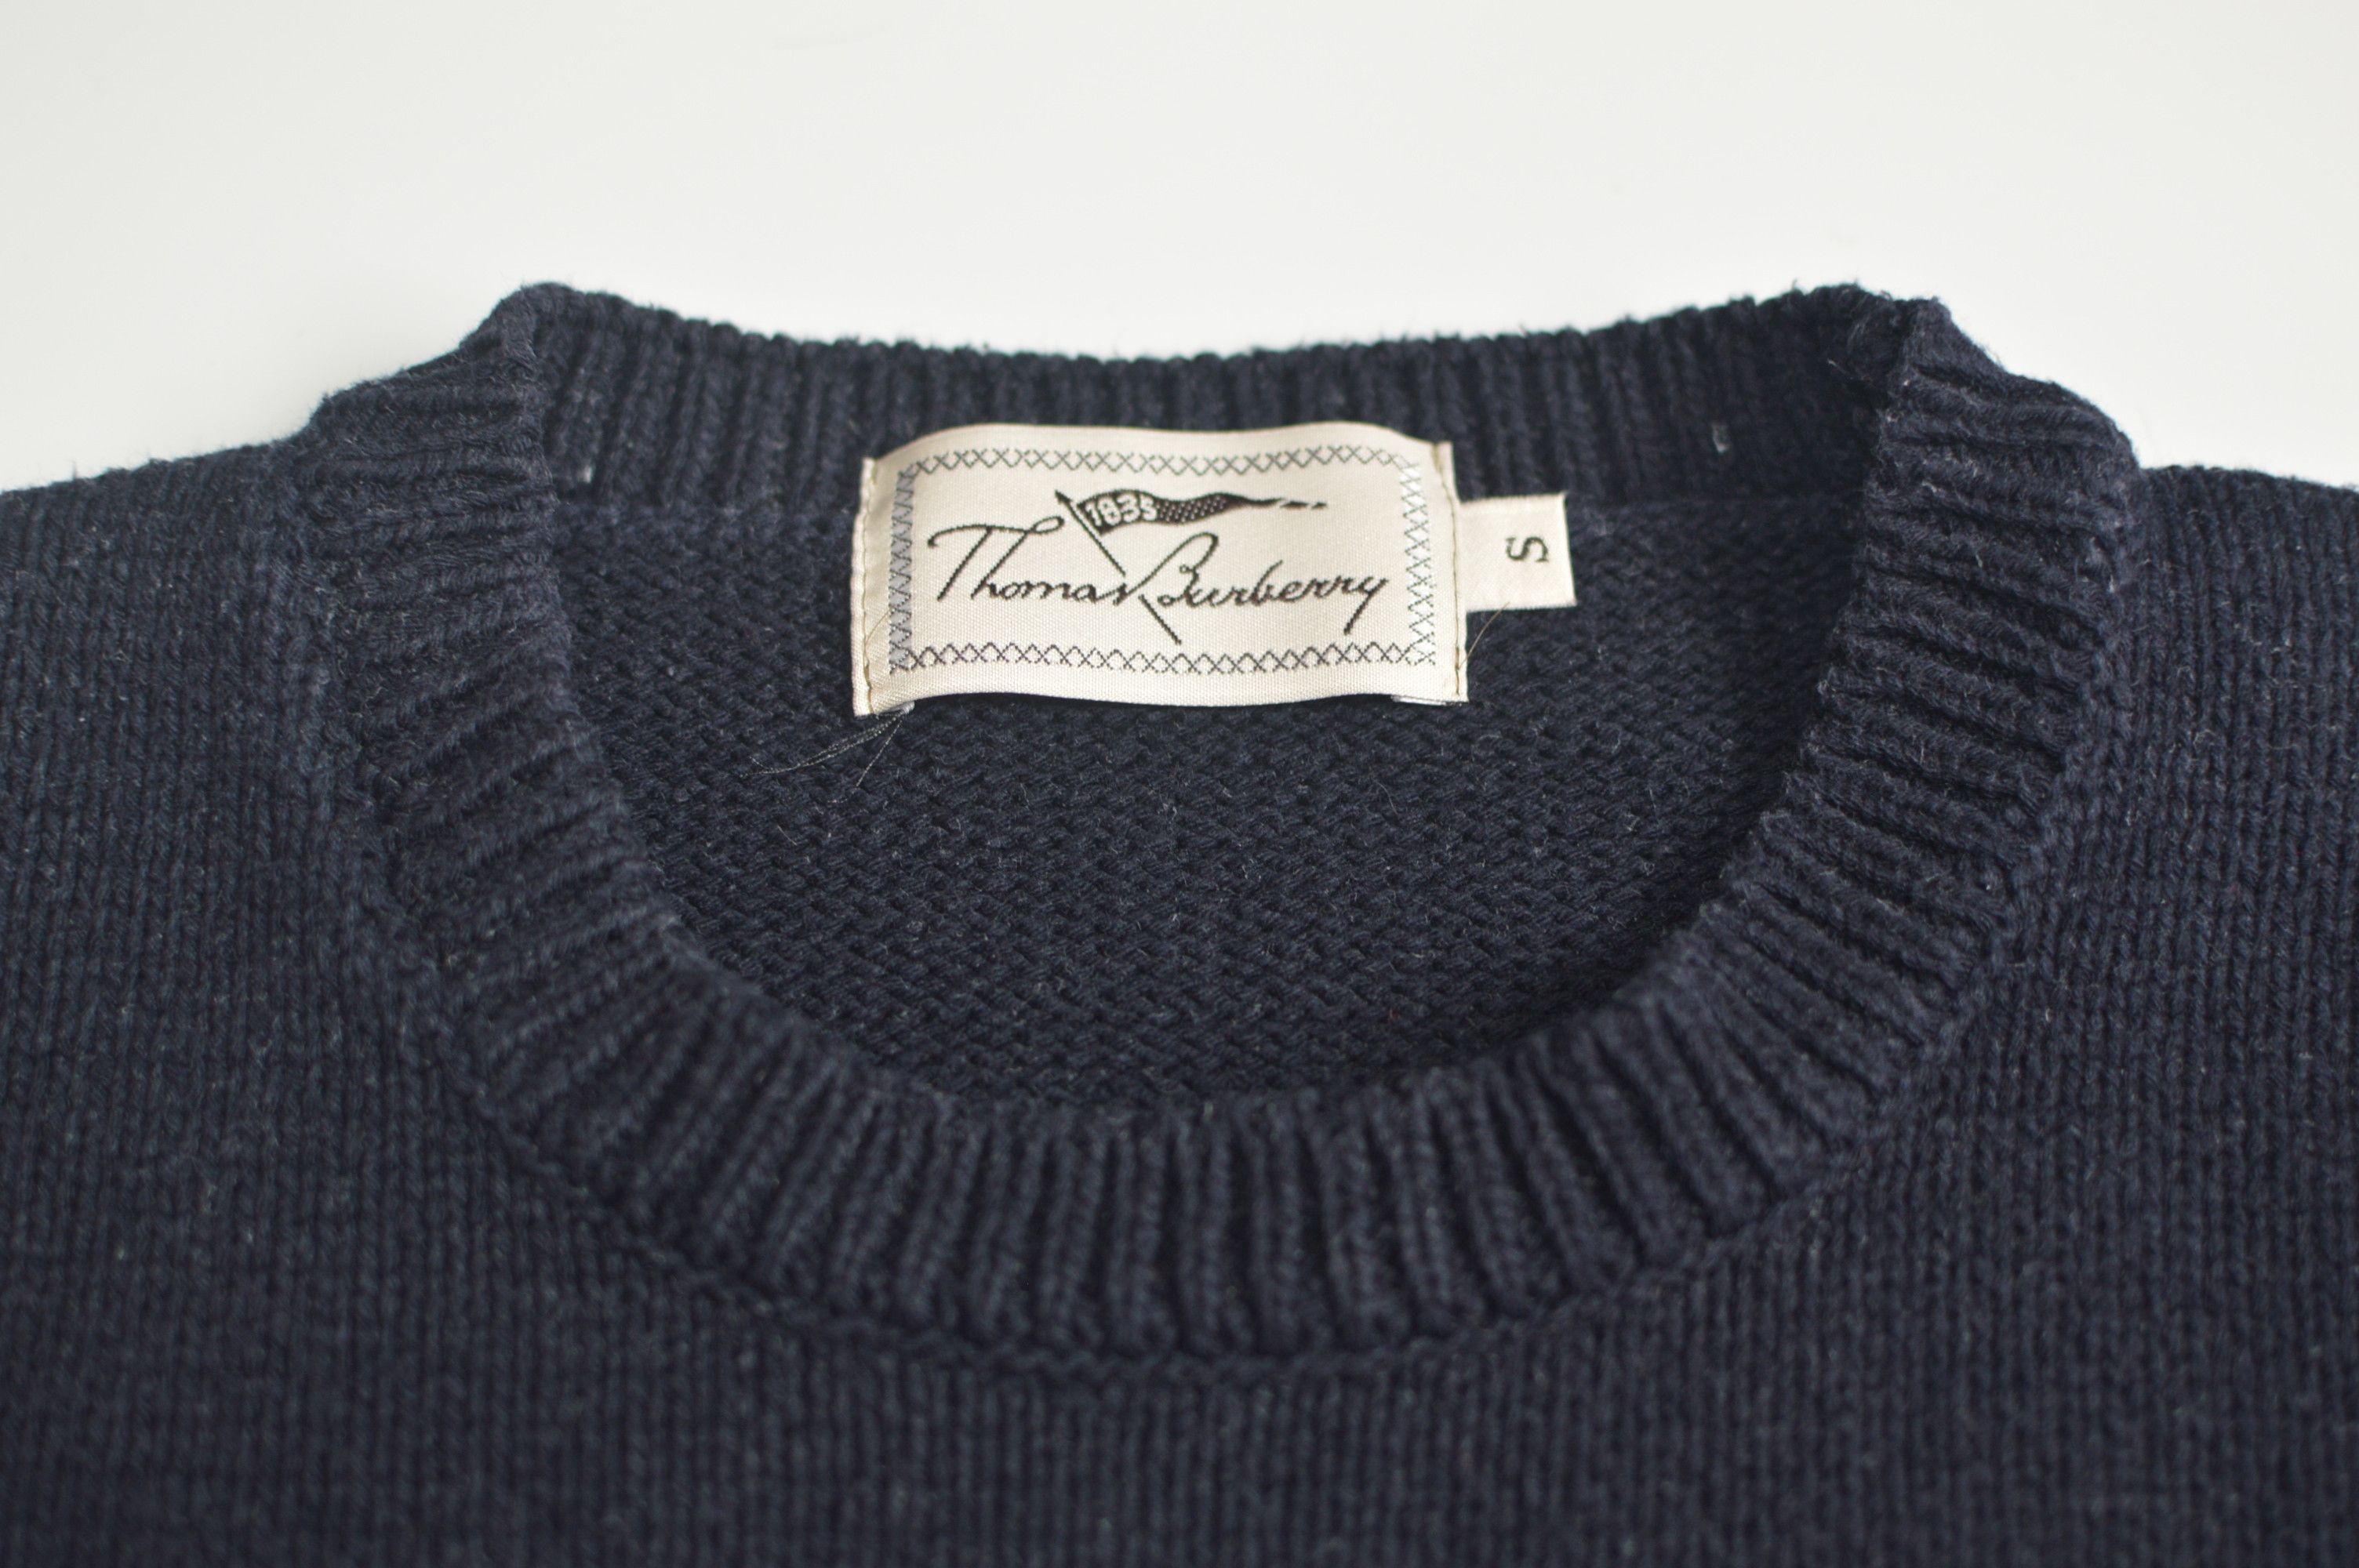 Vintage Vintage Thomas Burberry 1835 Sweater Wmns Size US S / EU 44-46 / 1 - 5 Thumbnail